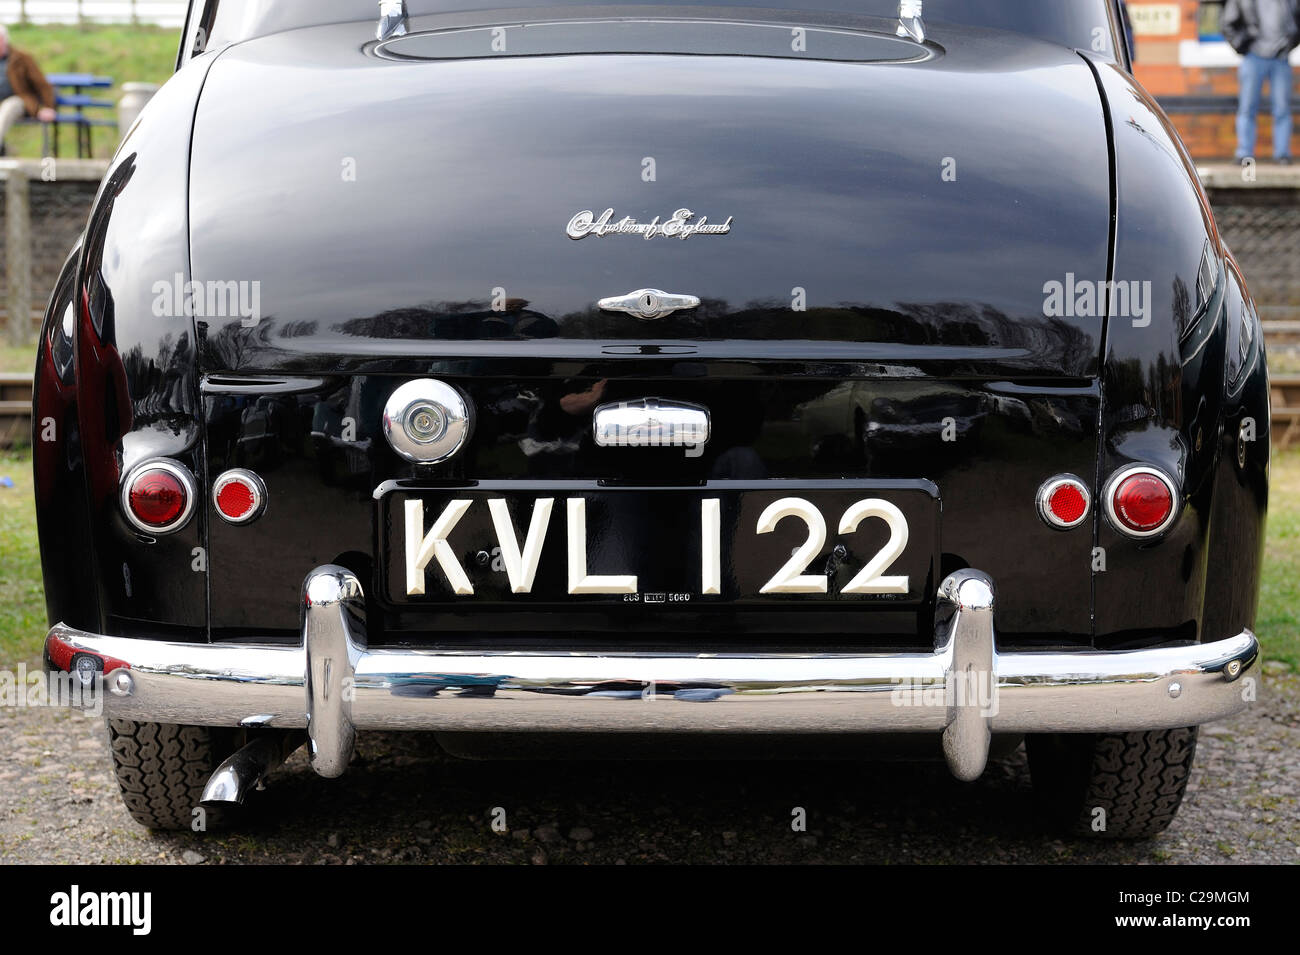 austin a30 vintage british car england uk Stock Photo